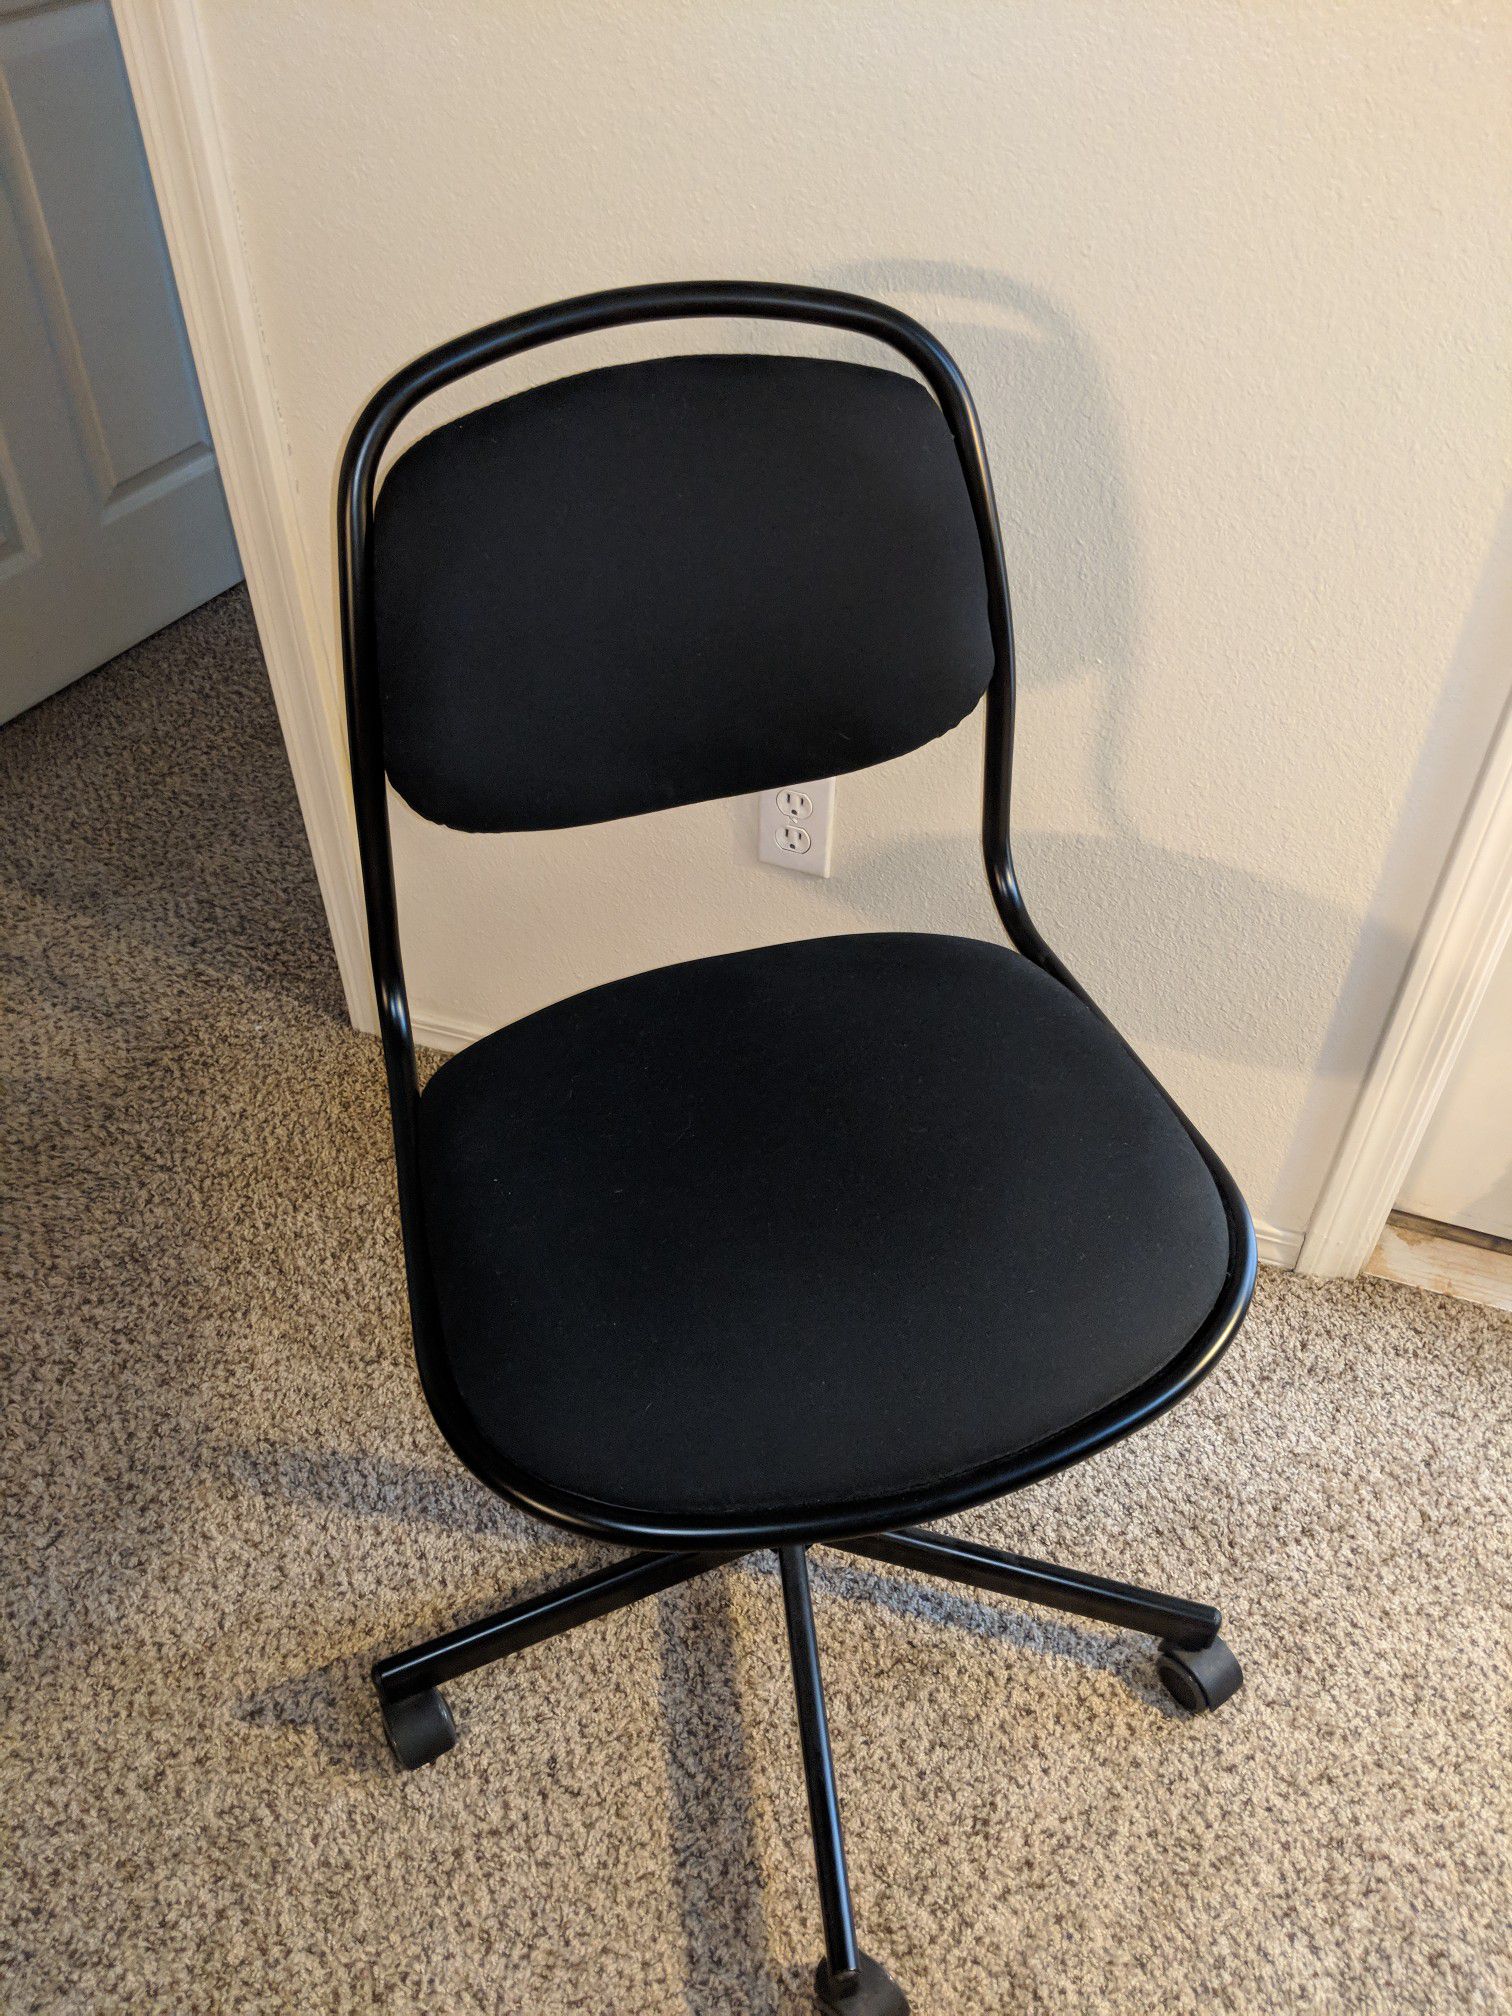 Ikea SKÅLBERG / SPORREN Swivel chair, white 14202.81120.610 